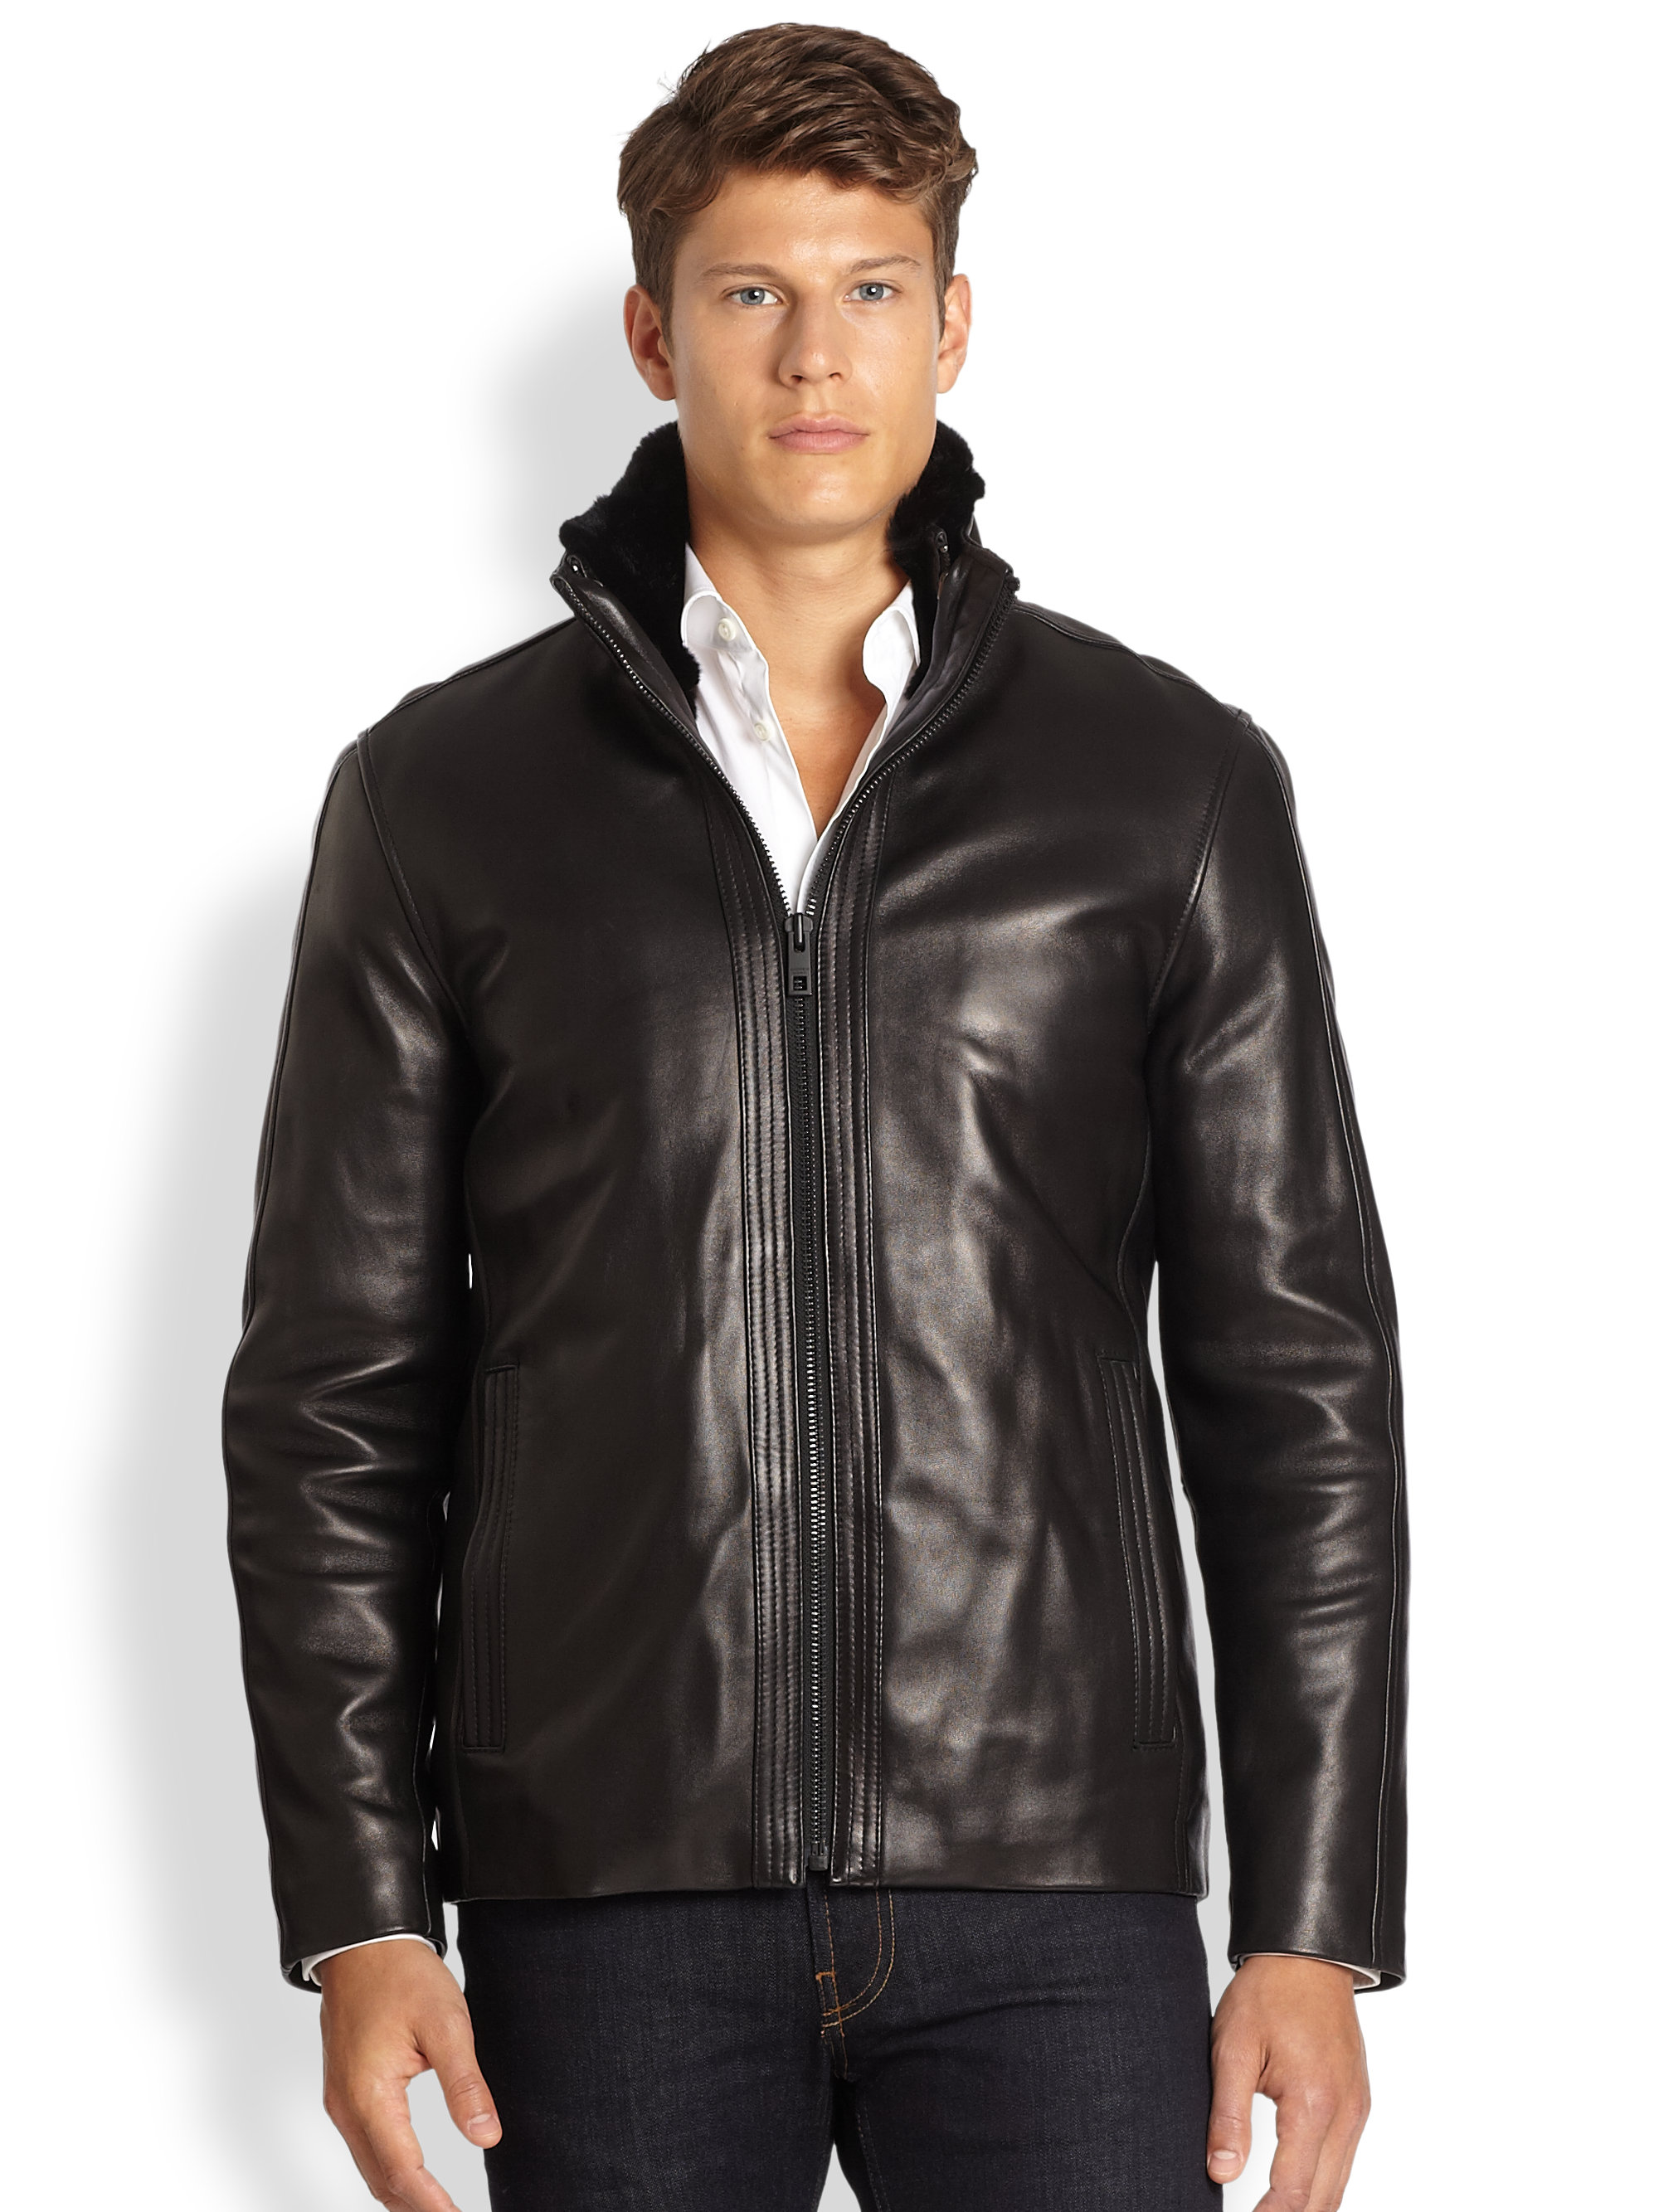 Lyst - Andrew marc Leather Rabbit Fur Jacket in Black for Men